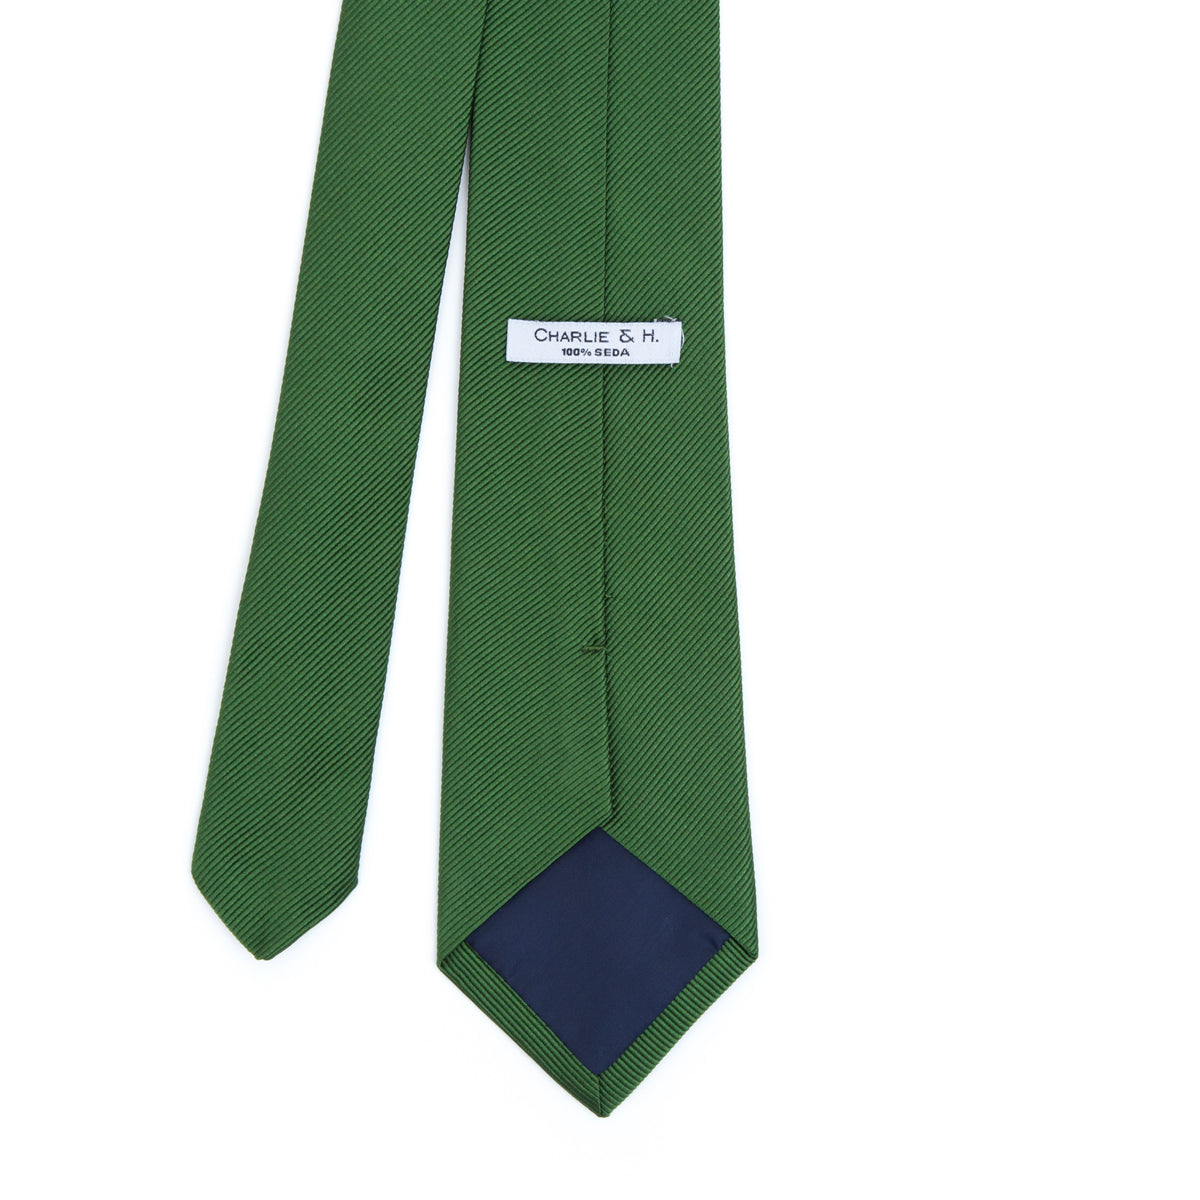 Green plain tie